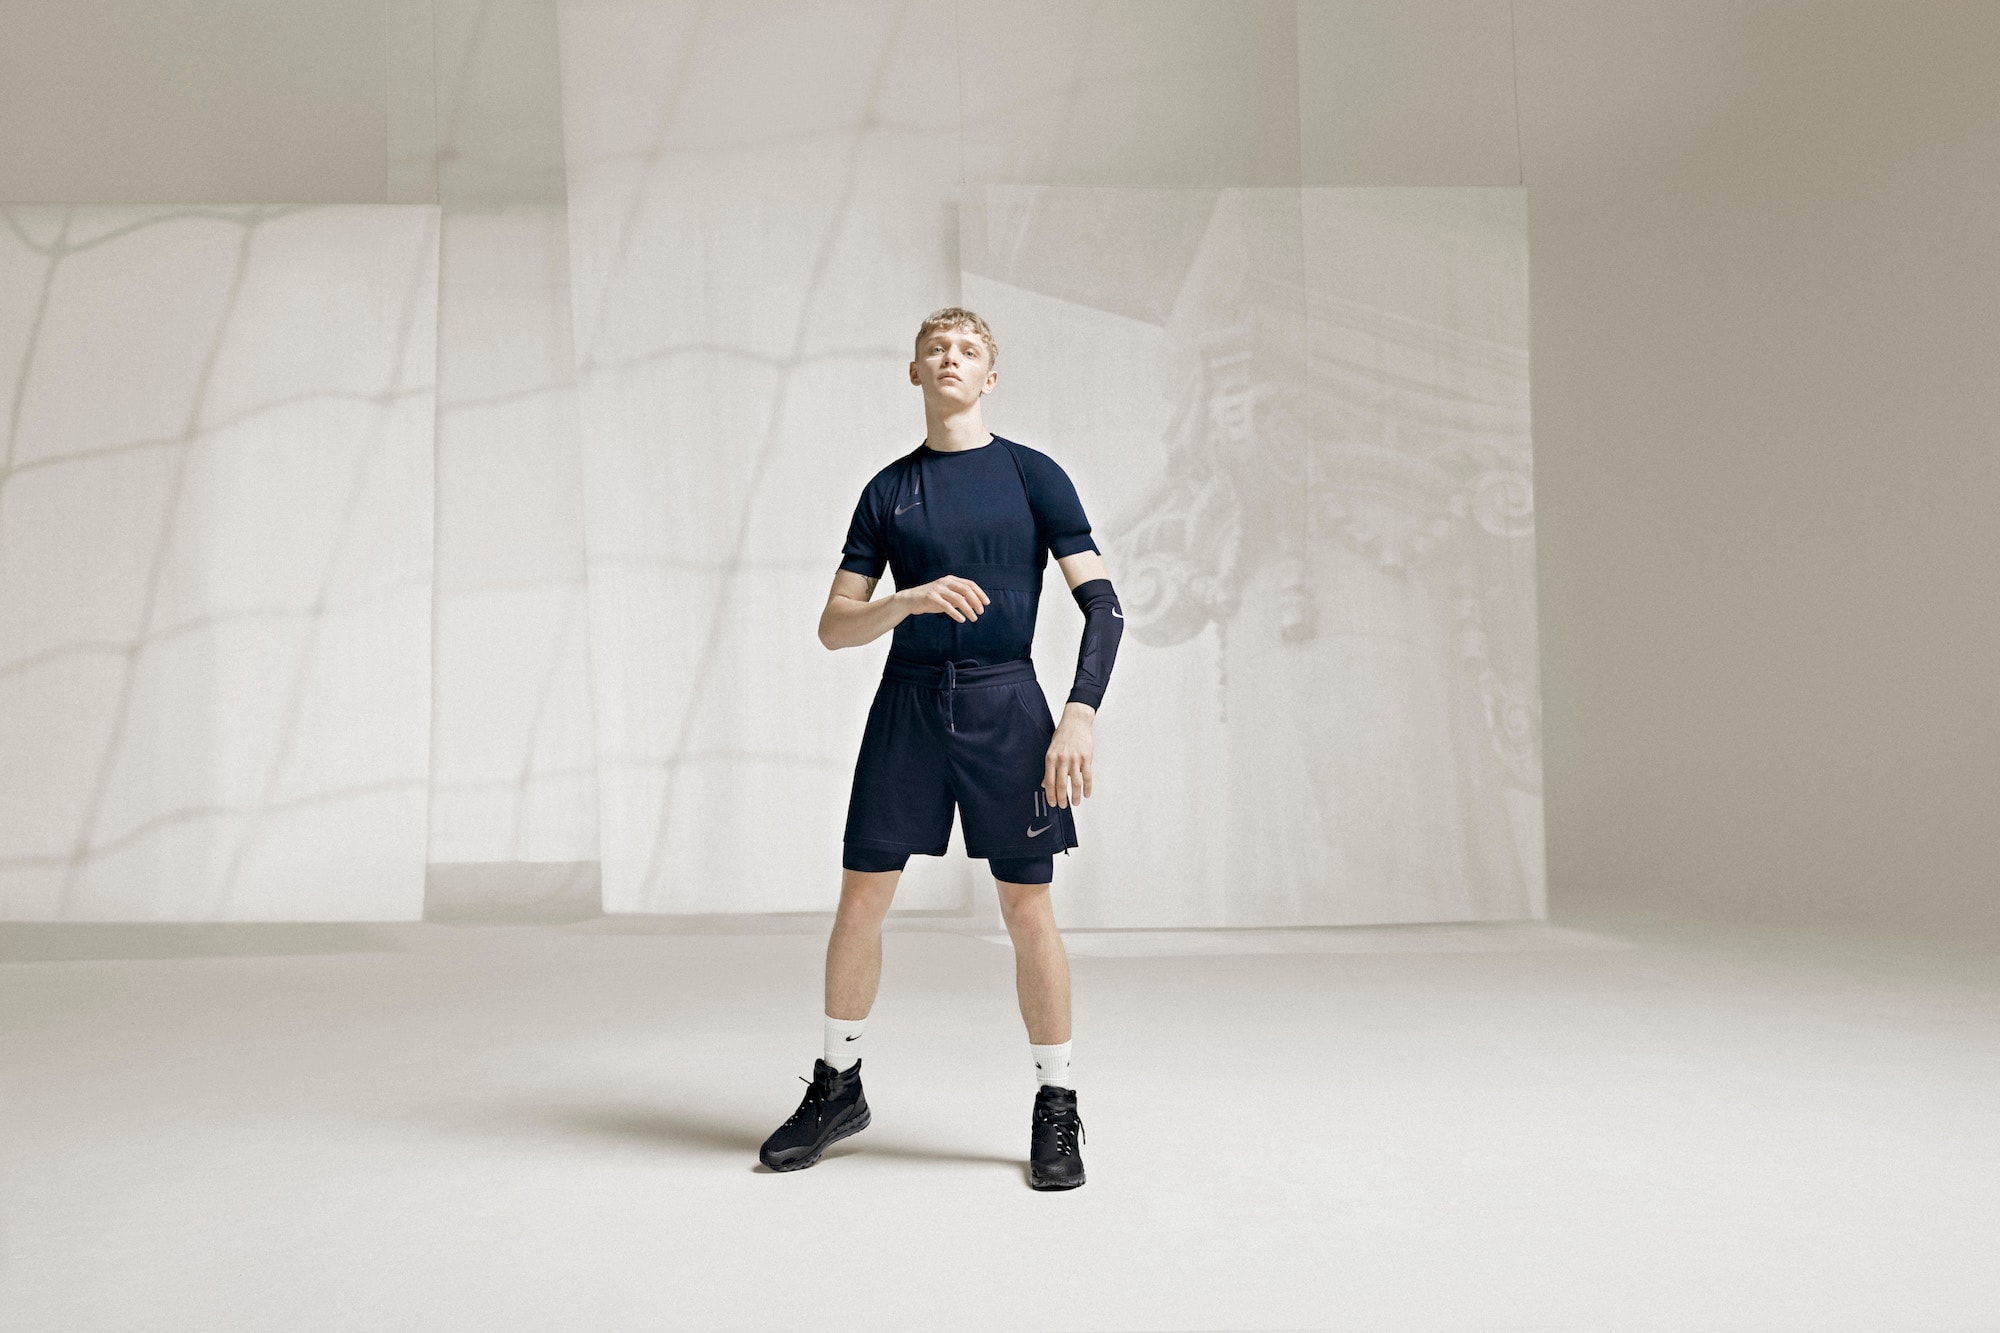 Nike x Kim Jones 聯名「Football Reimagined」系列正式發布